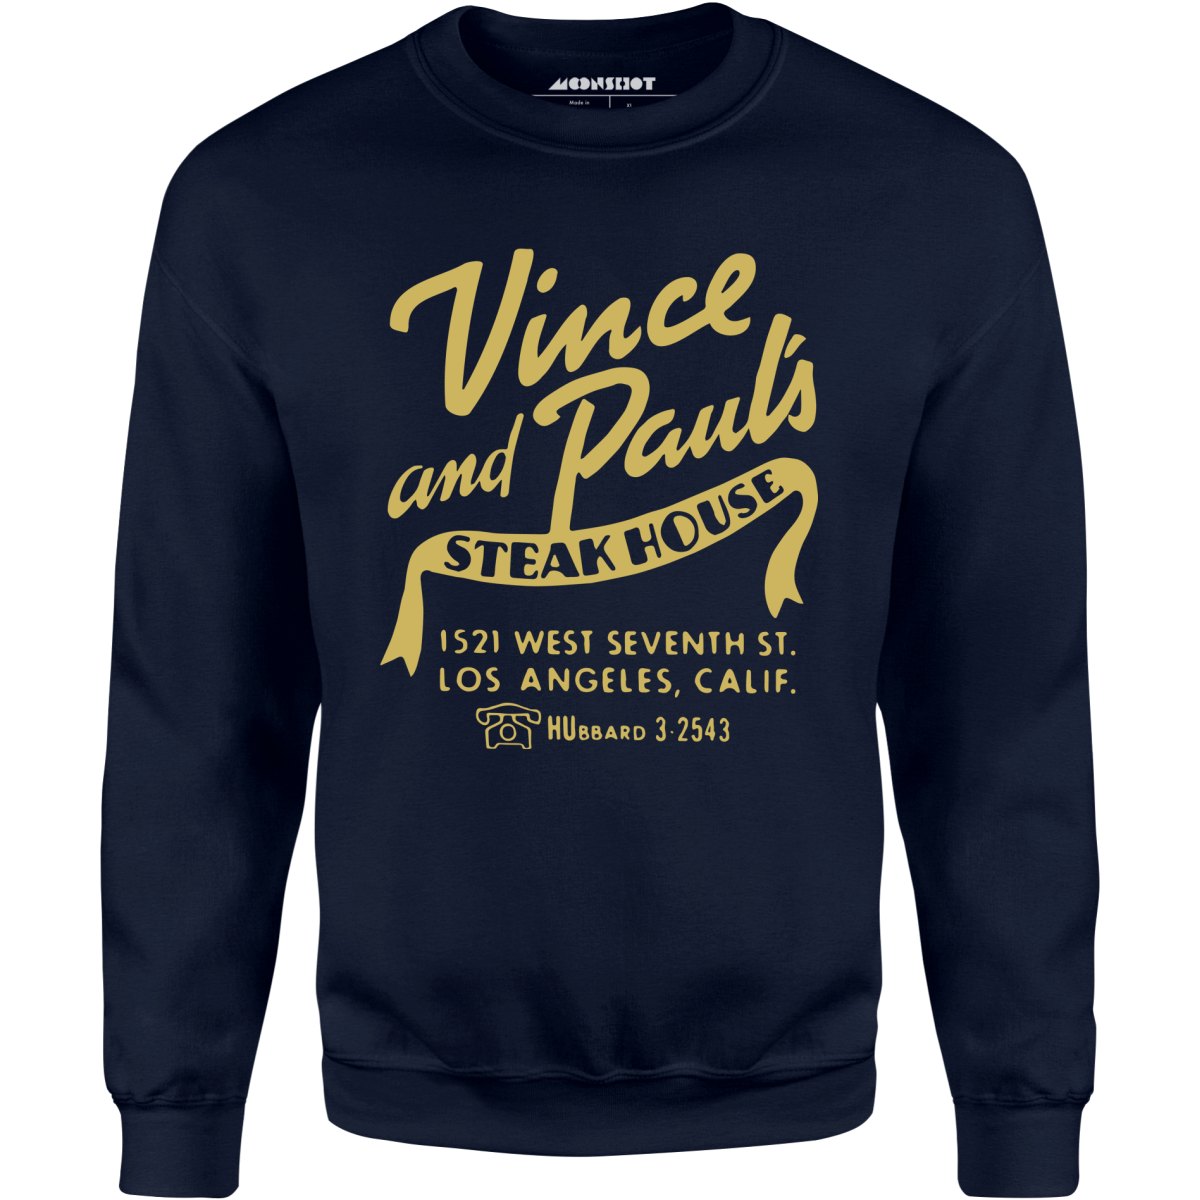 Vince and Paul's Steakhouse - Los Angeles, CA - Vintage Restaurant - Unisex Sweatshirt